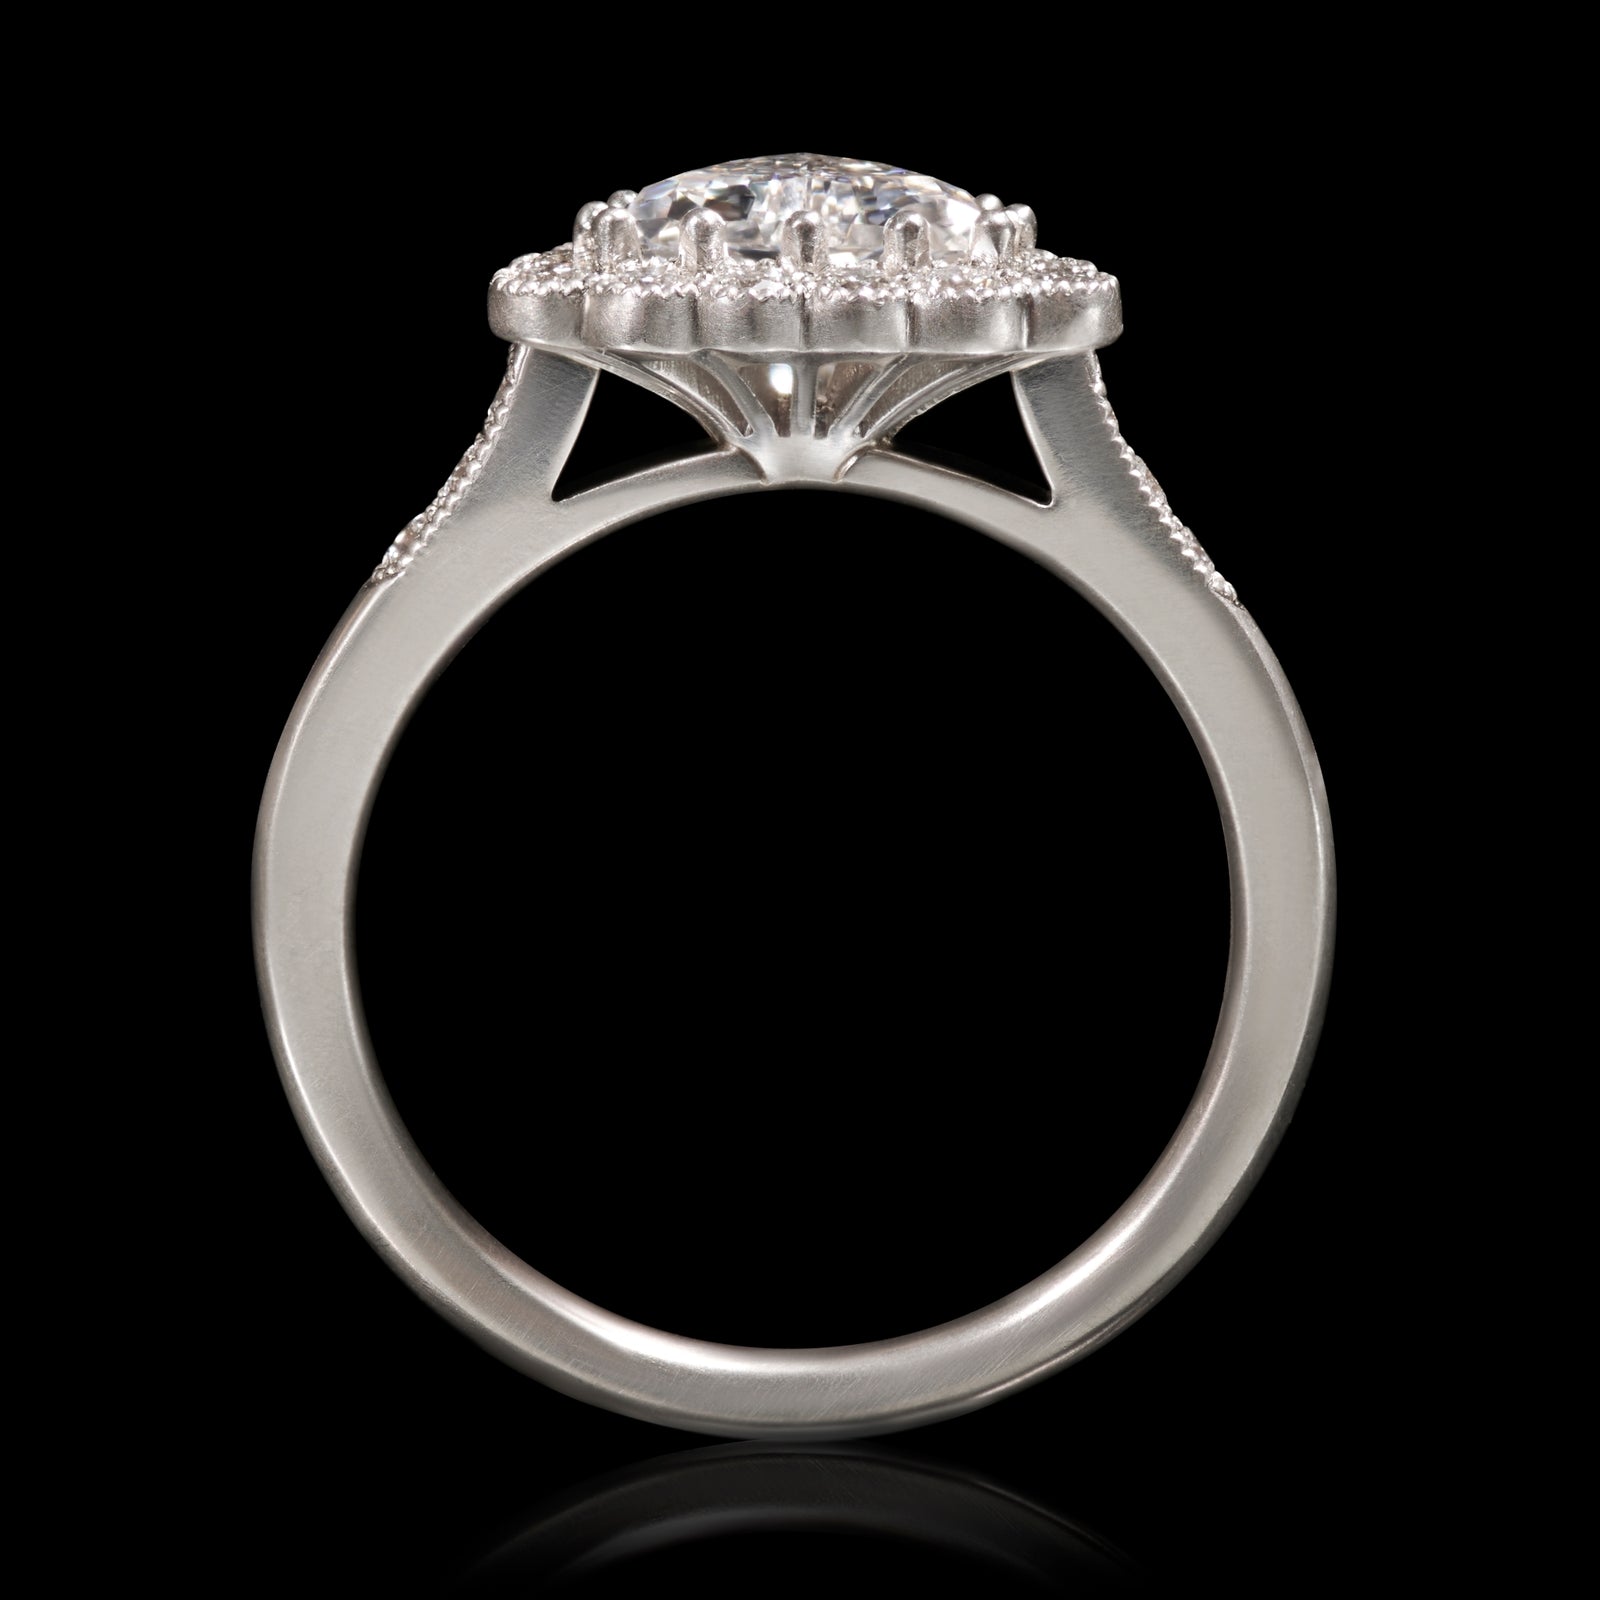 A unique Trilliant cut Diamond cluster ring